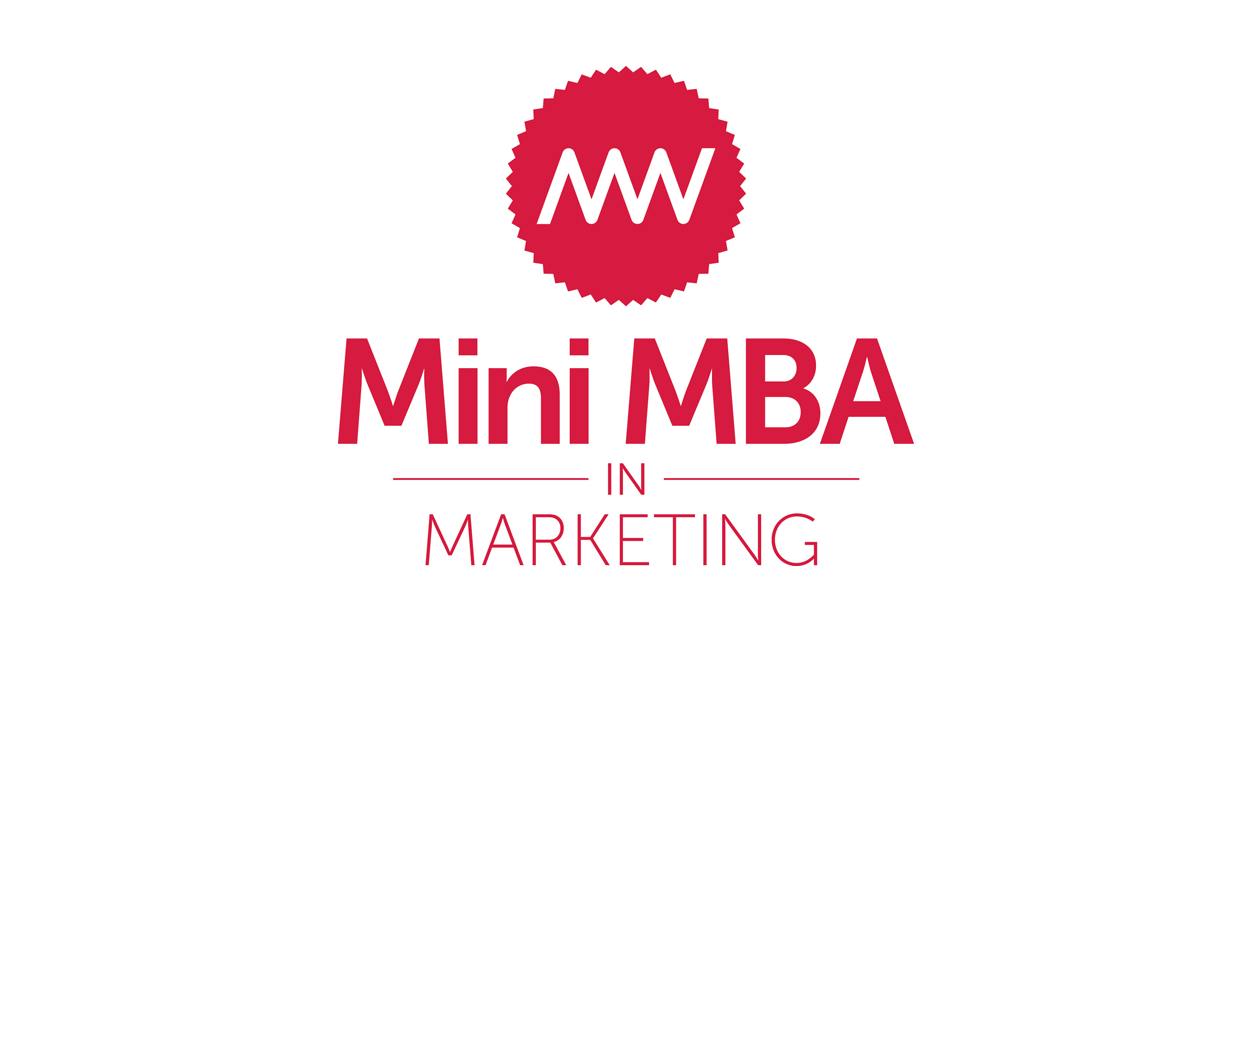 Marketing weekend. Мини MBA. Mini-MBA фон. Mini MBA logo. MBA Mini Мем.